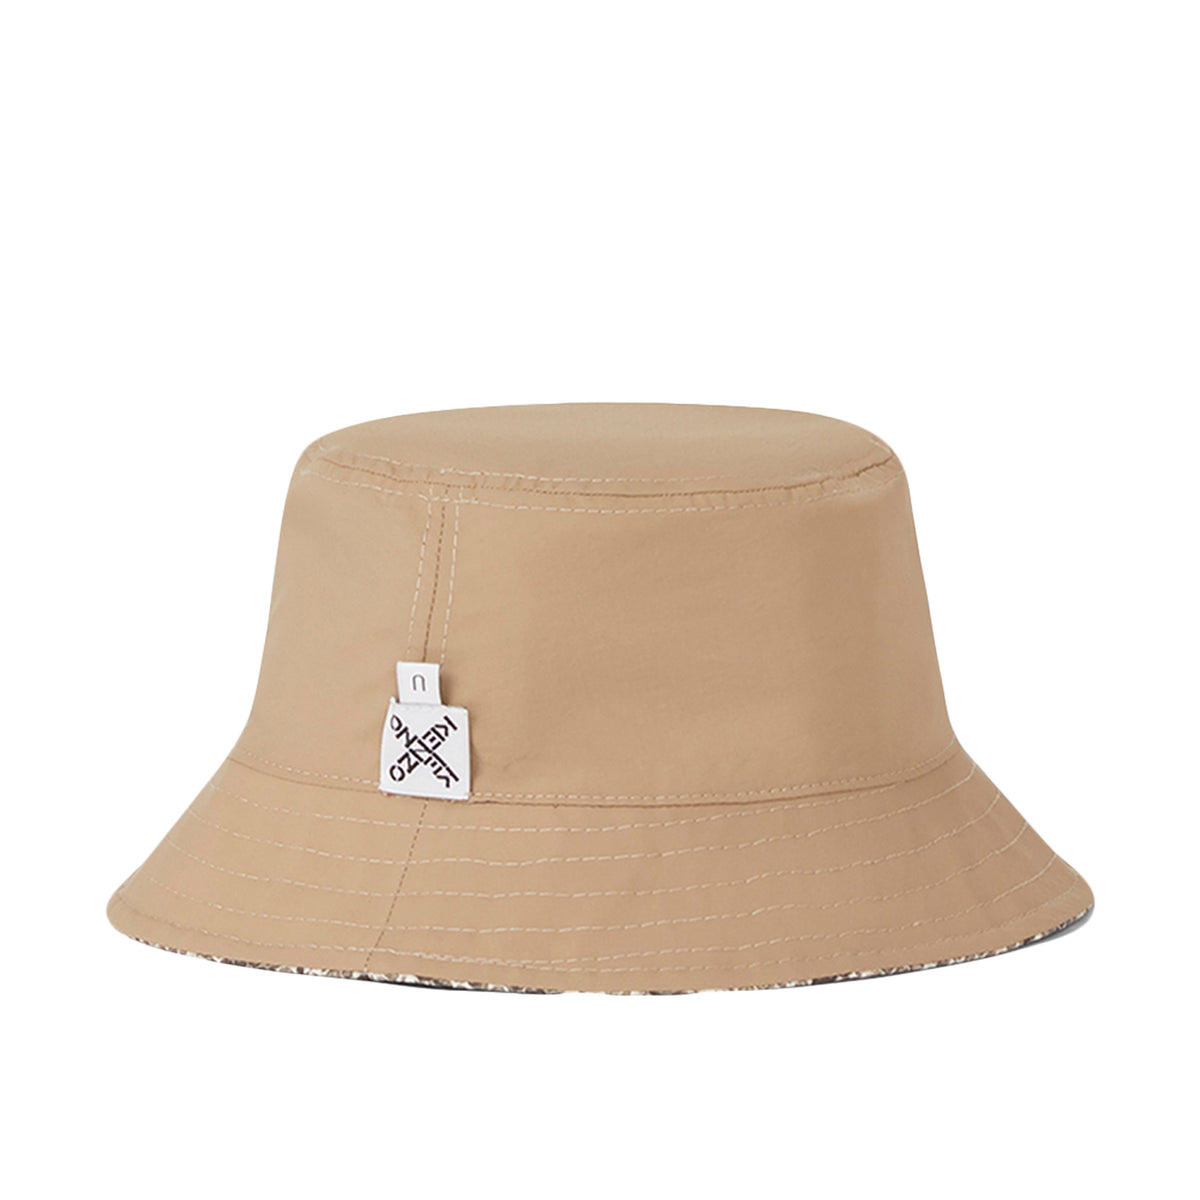 Kenzo 'Python' Reversible Bucket Hat